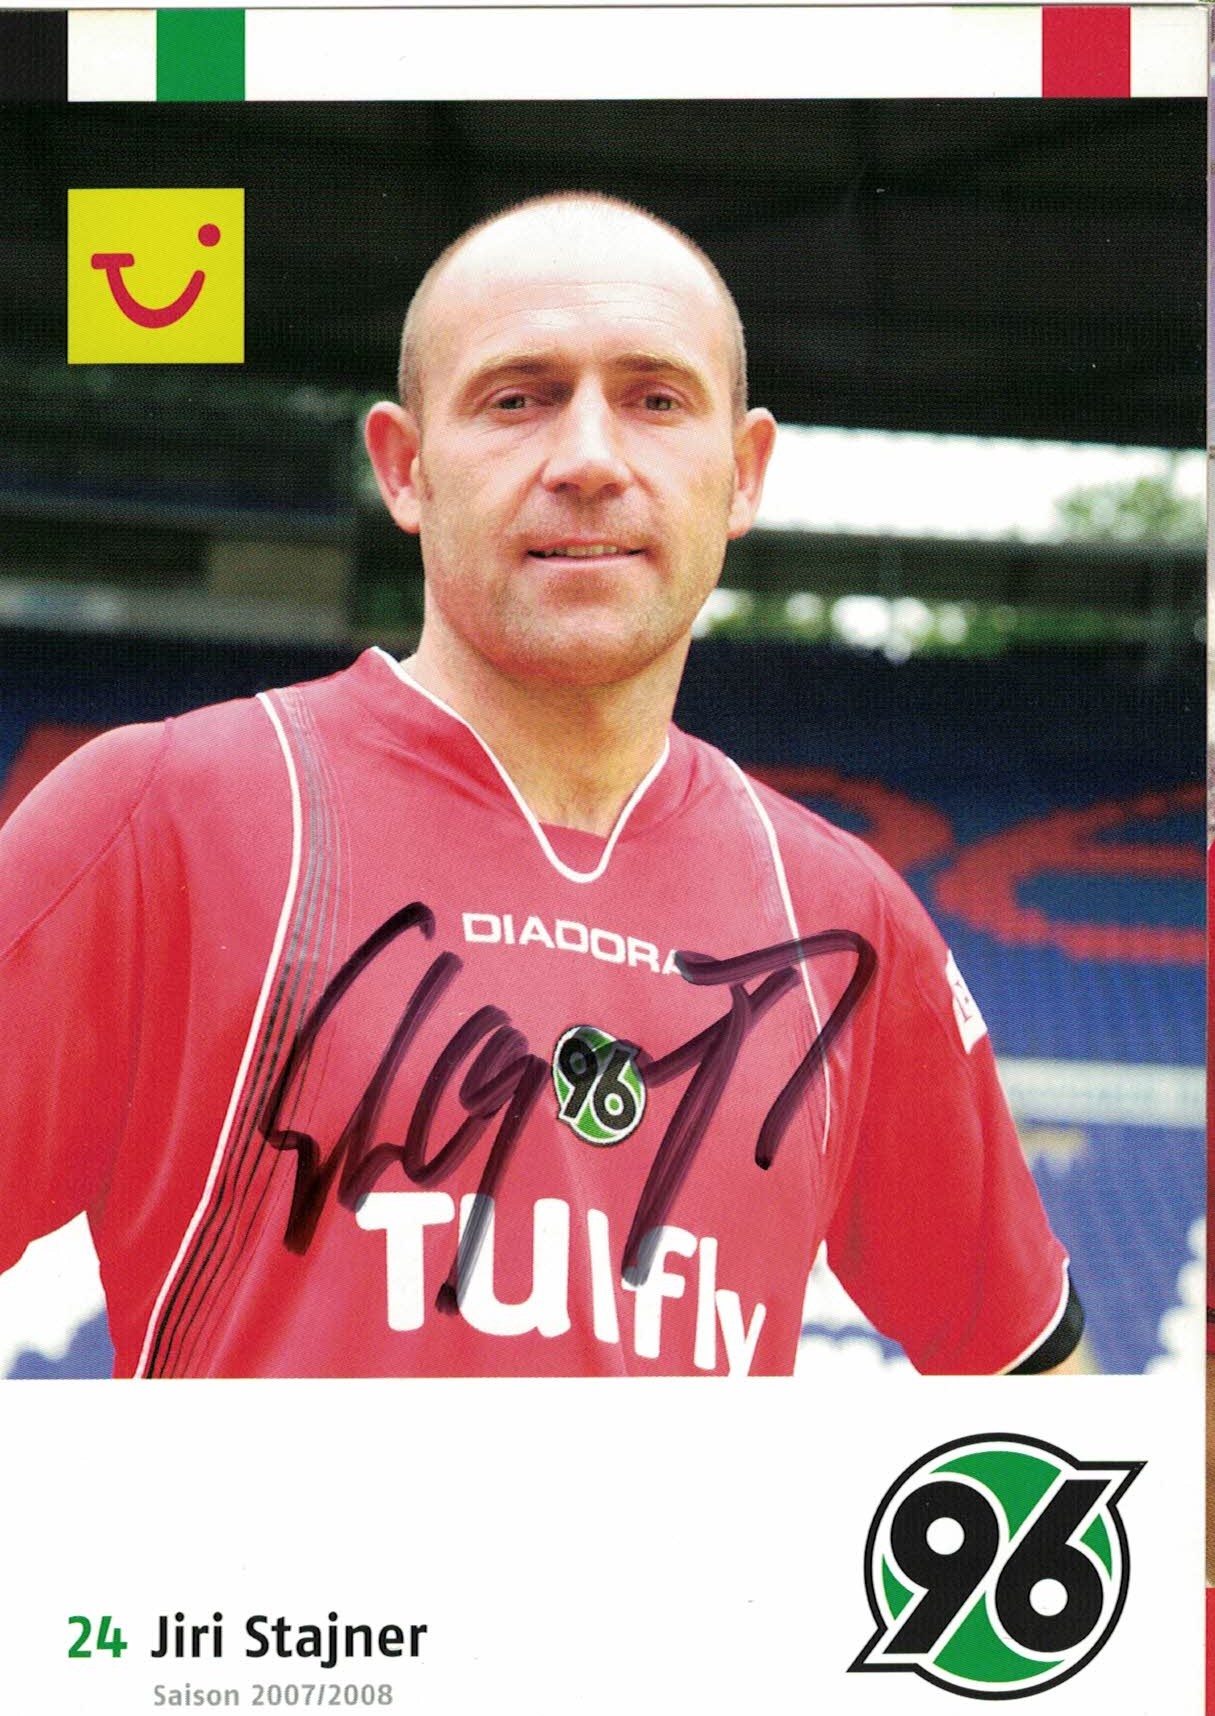 Jiri Stajner Hannover 96 2007/08 Podpisova karta autogram